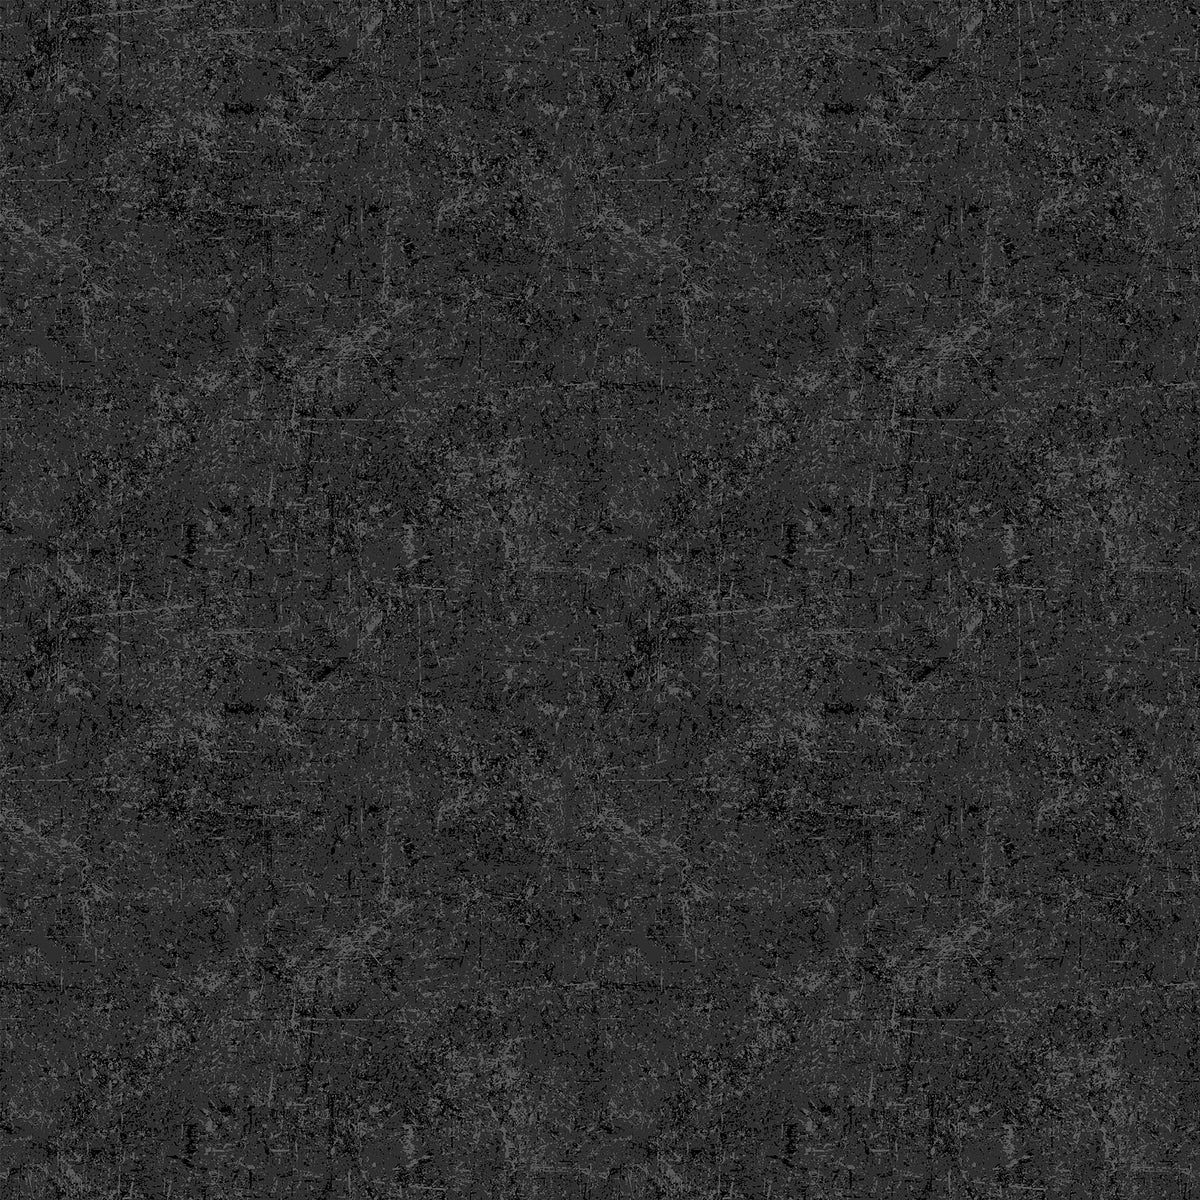 Glisten Quilt Fabric - Blender in Charcoal Black - P10091-99